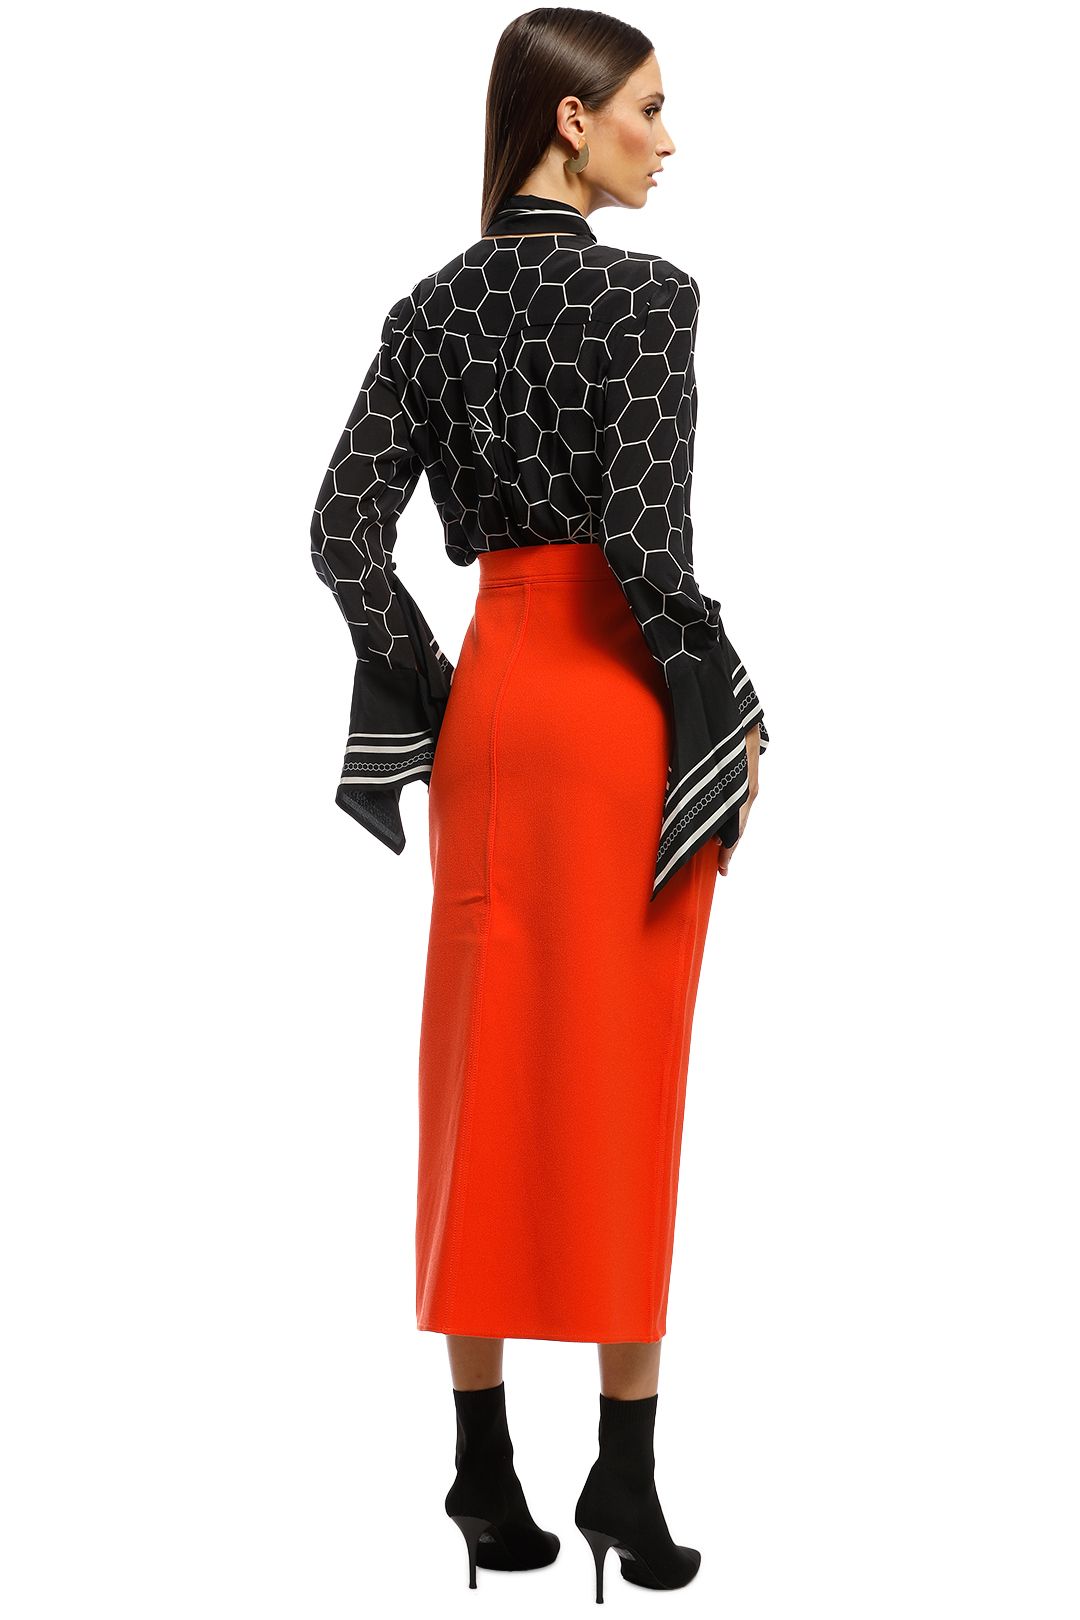 CMEO Collective - High Heart Skirt - Orange - Back